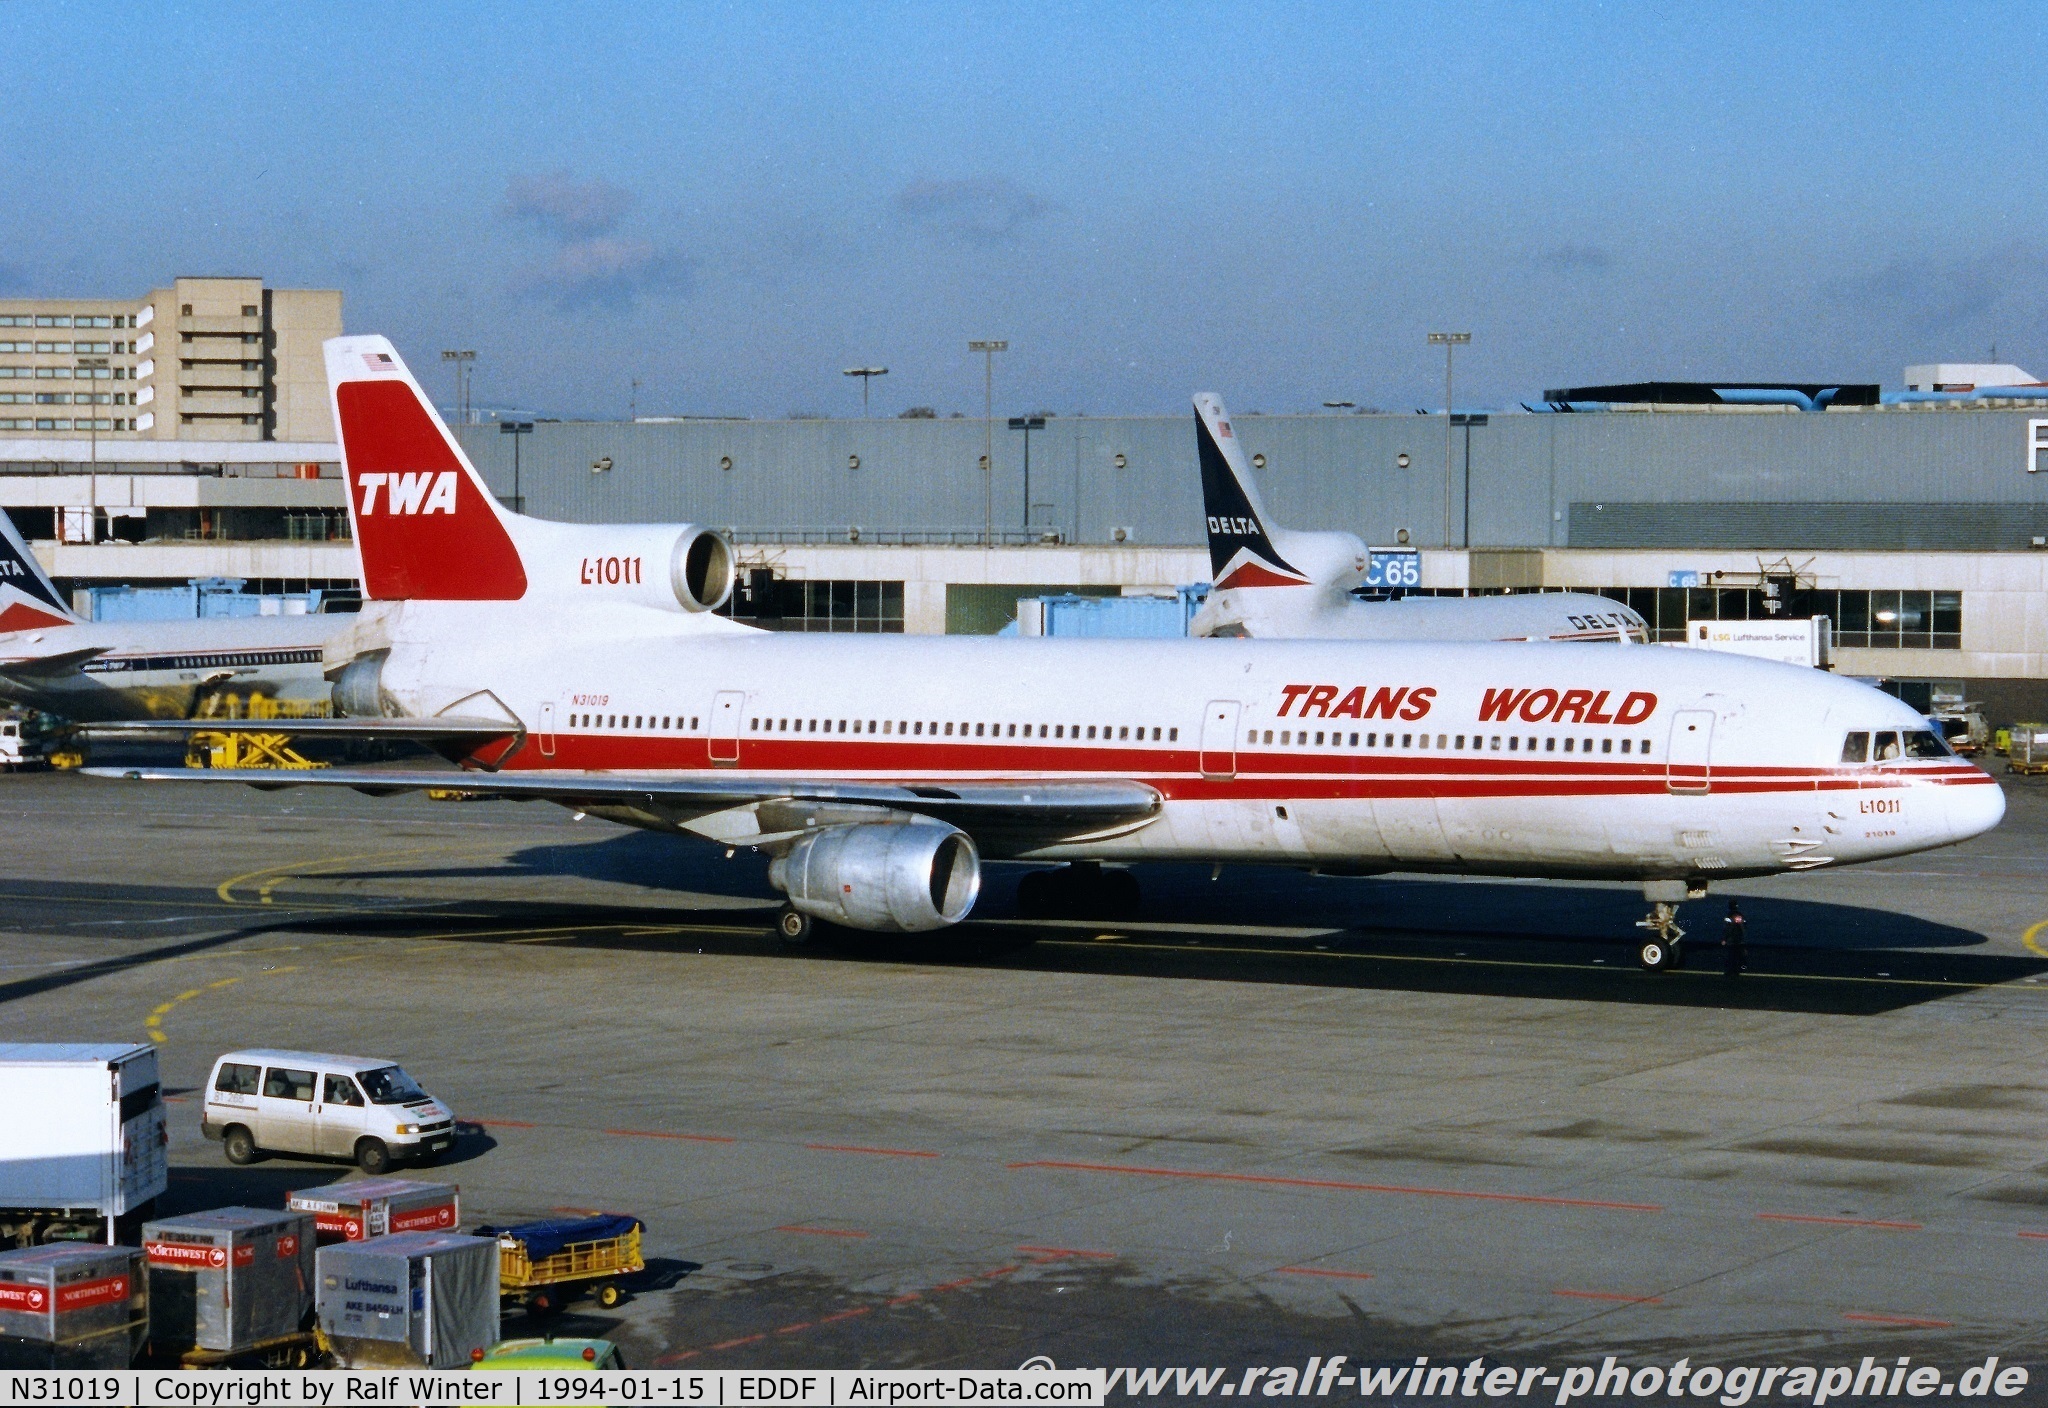 N31019, 1973 Lockheed L-1011-385-1 TriStar 50 C/N 193B-1066, Lockheed L-1011-50 - TW TWA Trans World Airlines - 193B-1066 - N31019 - 01.1994 - FRA